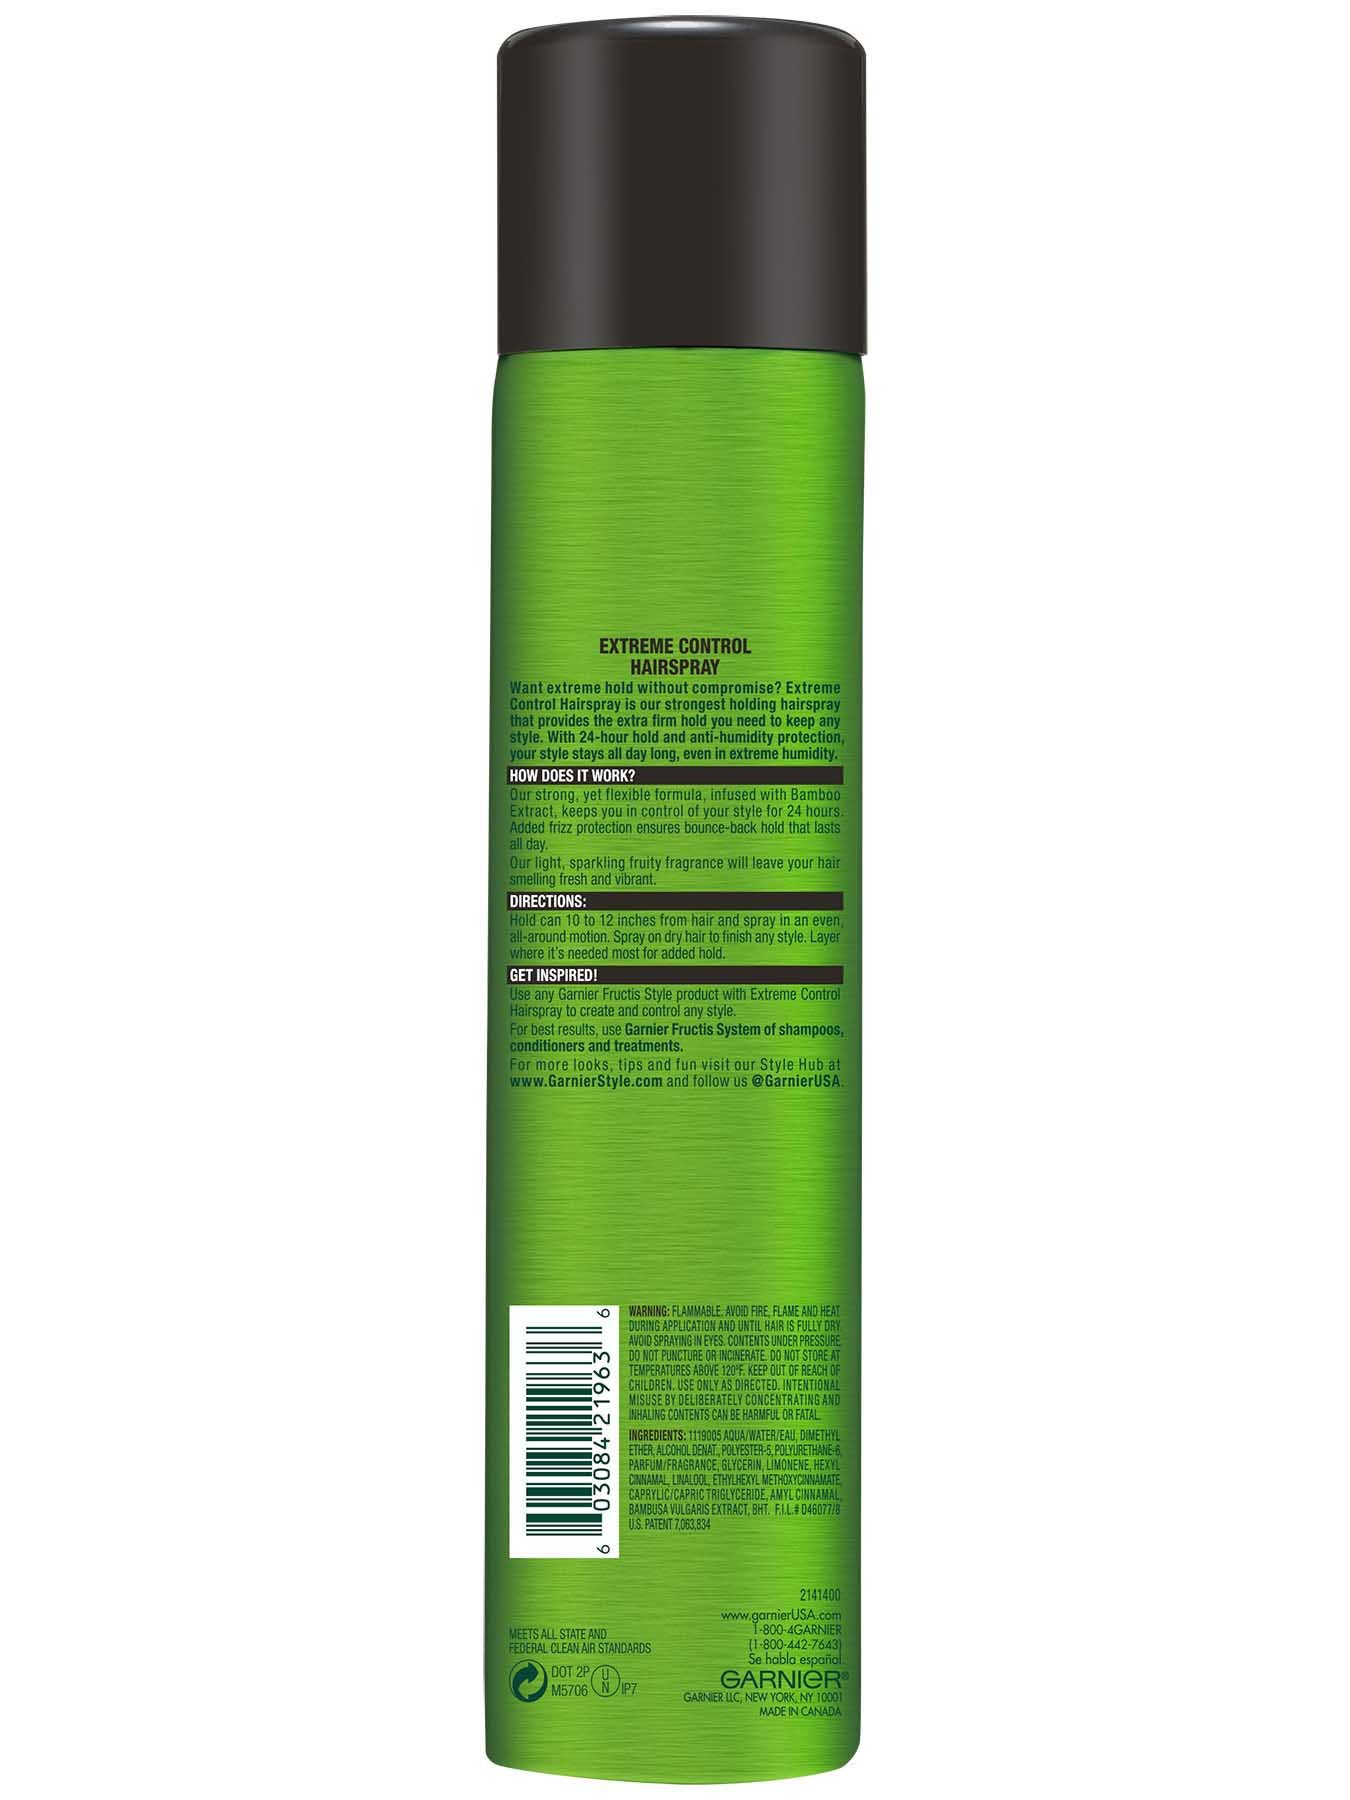 Back view of Extreme Control Anti-Humidity Aerosol Hair Spray.